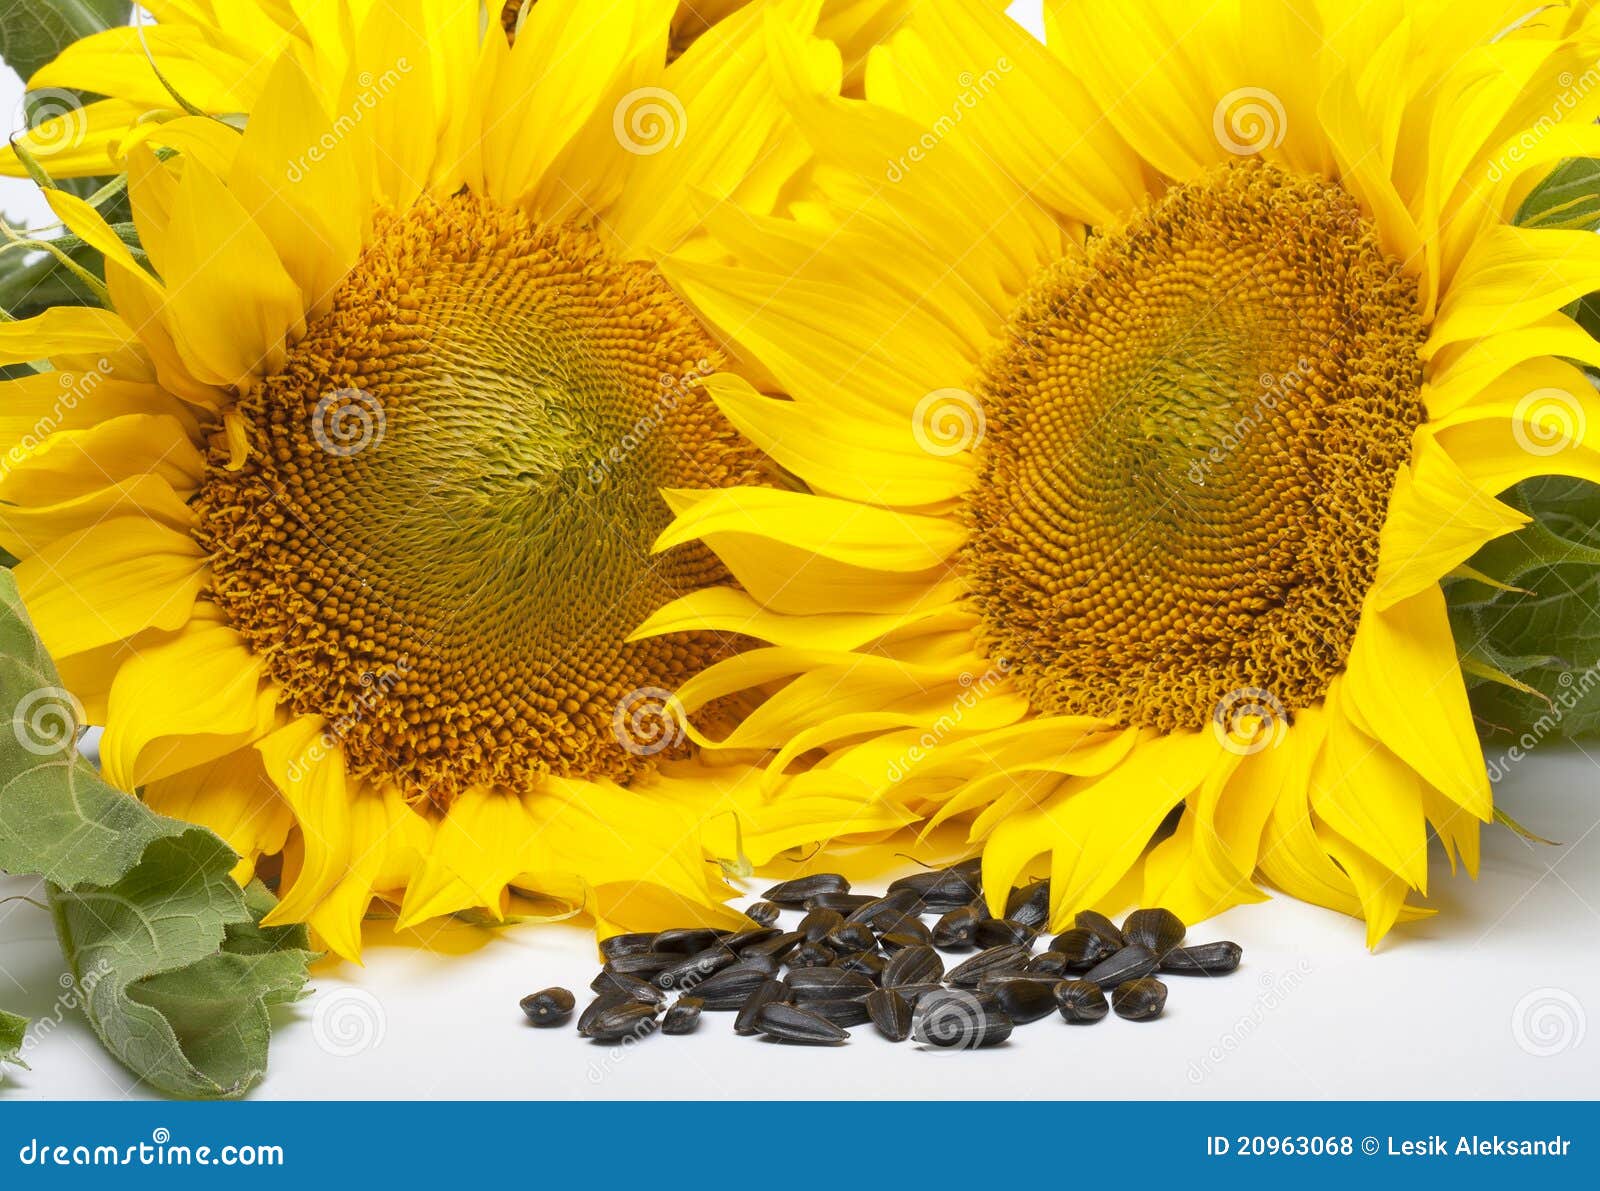 Yellow Flowers of Sunflower Seeds Stock Photo - Image of botany, bright ...